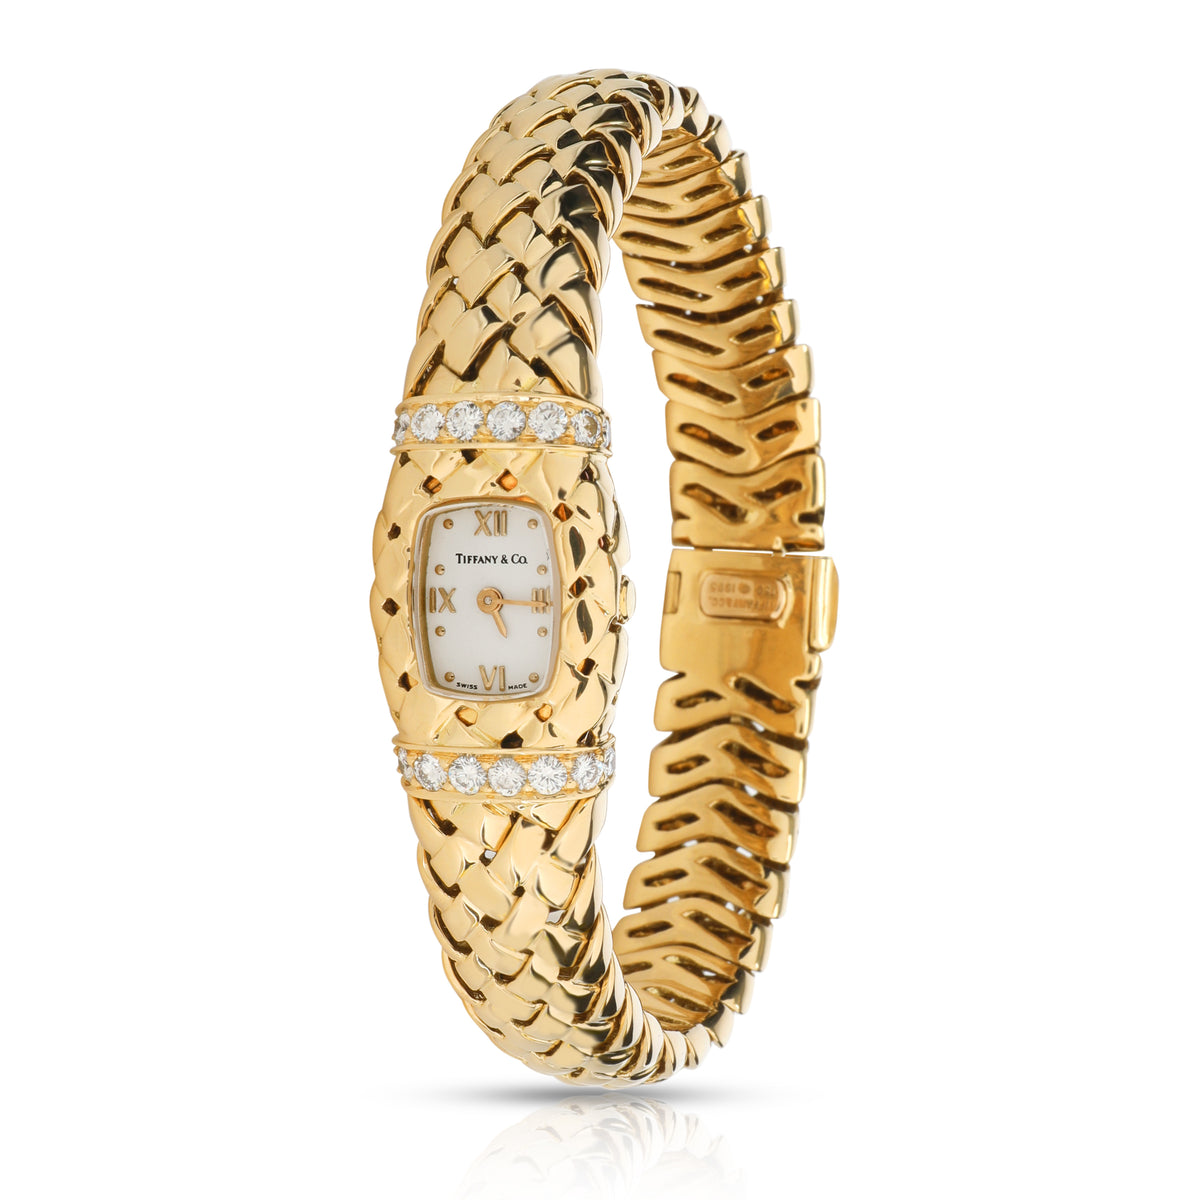 Tiffany & Co. Vannerie Vannerie Women's Watch in 18kt Yellow Gold